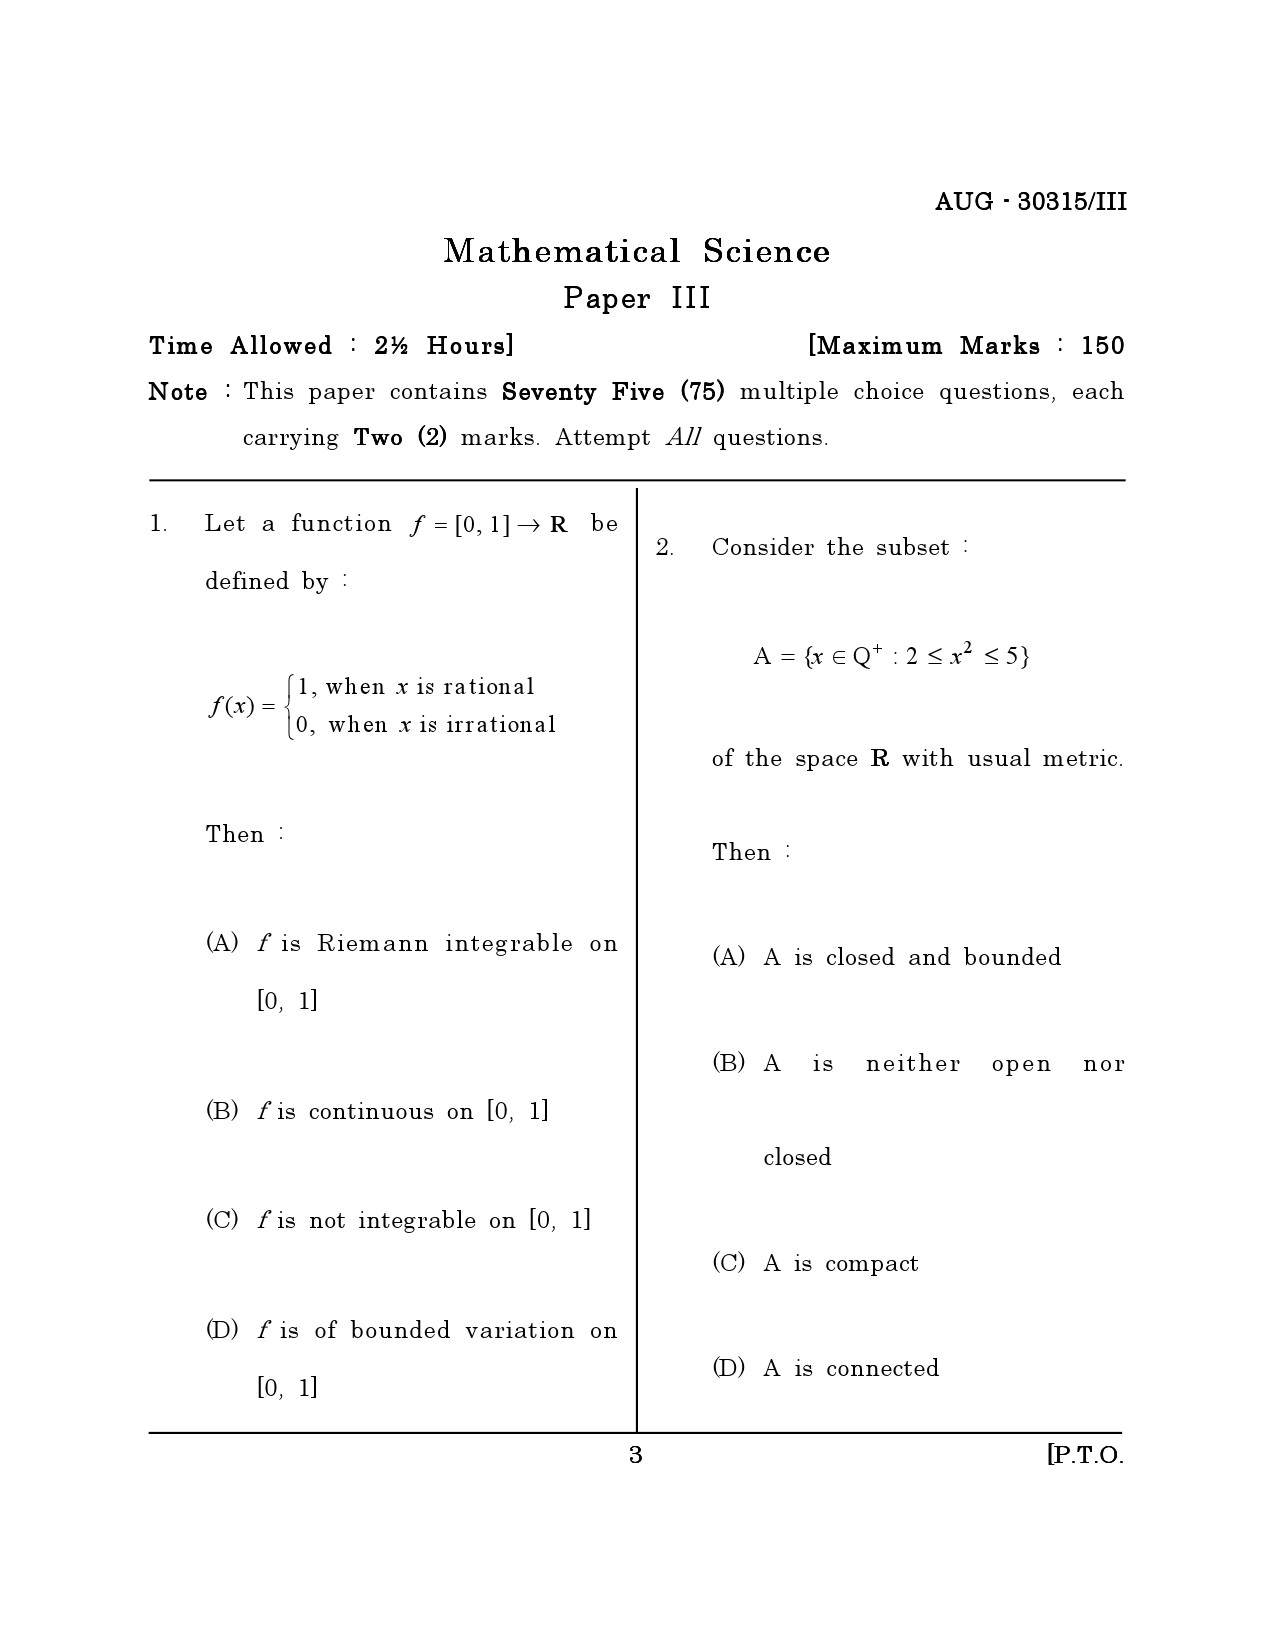 Maharashtra SET Mathematical Sciences Question Paper III August 2015 2